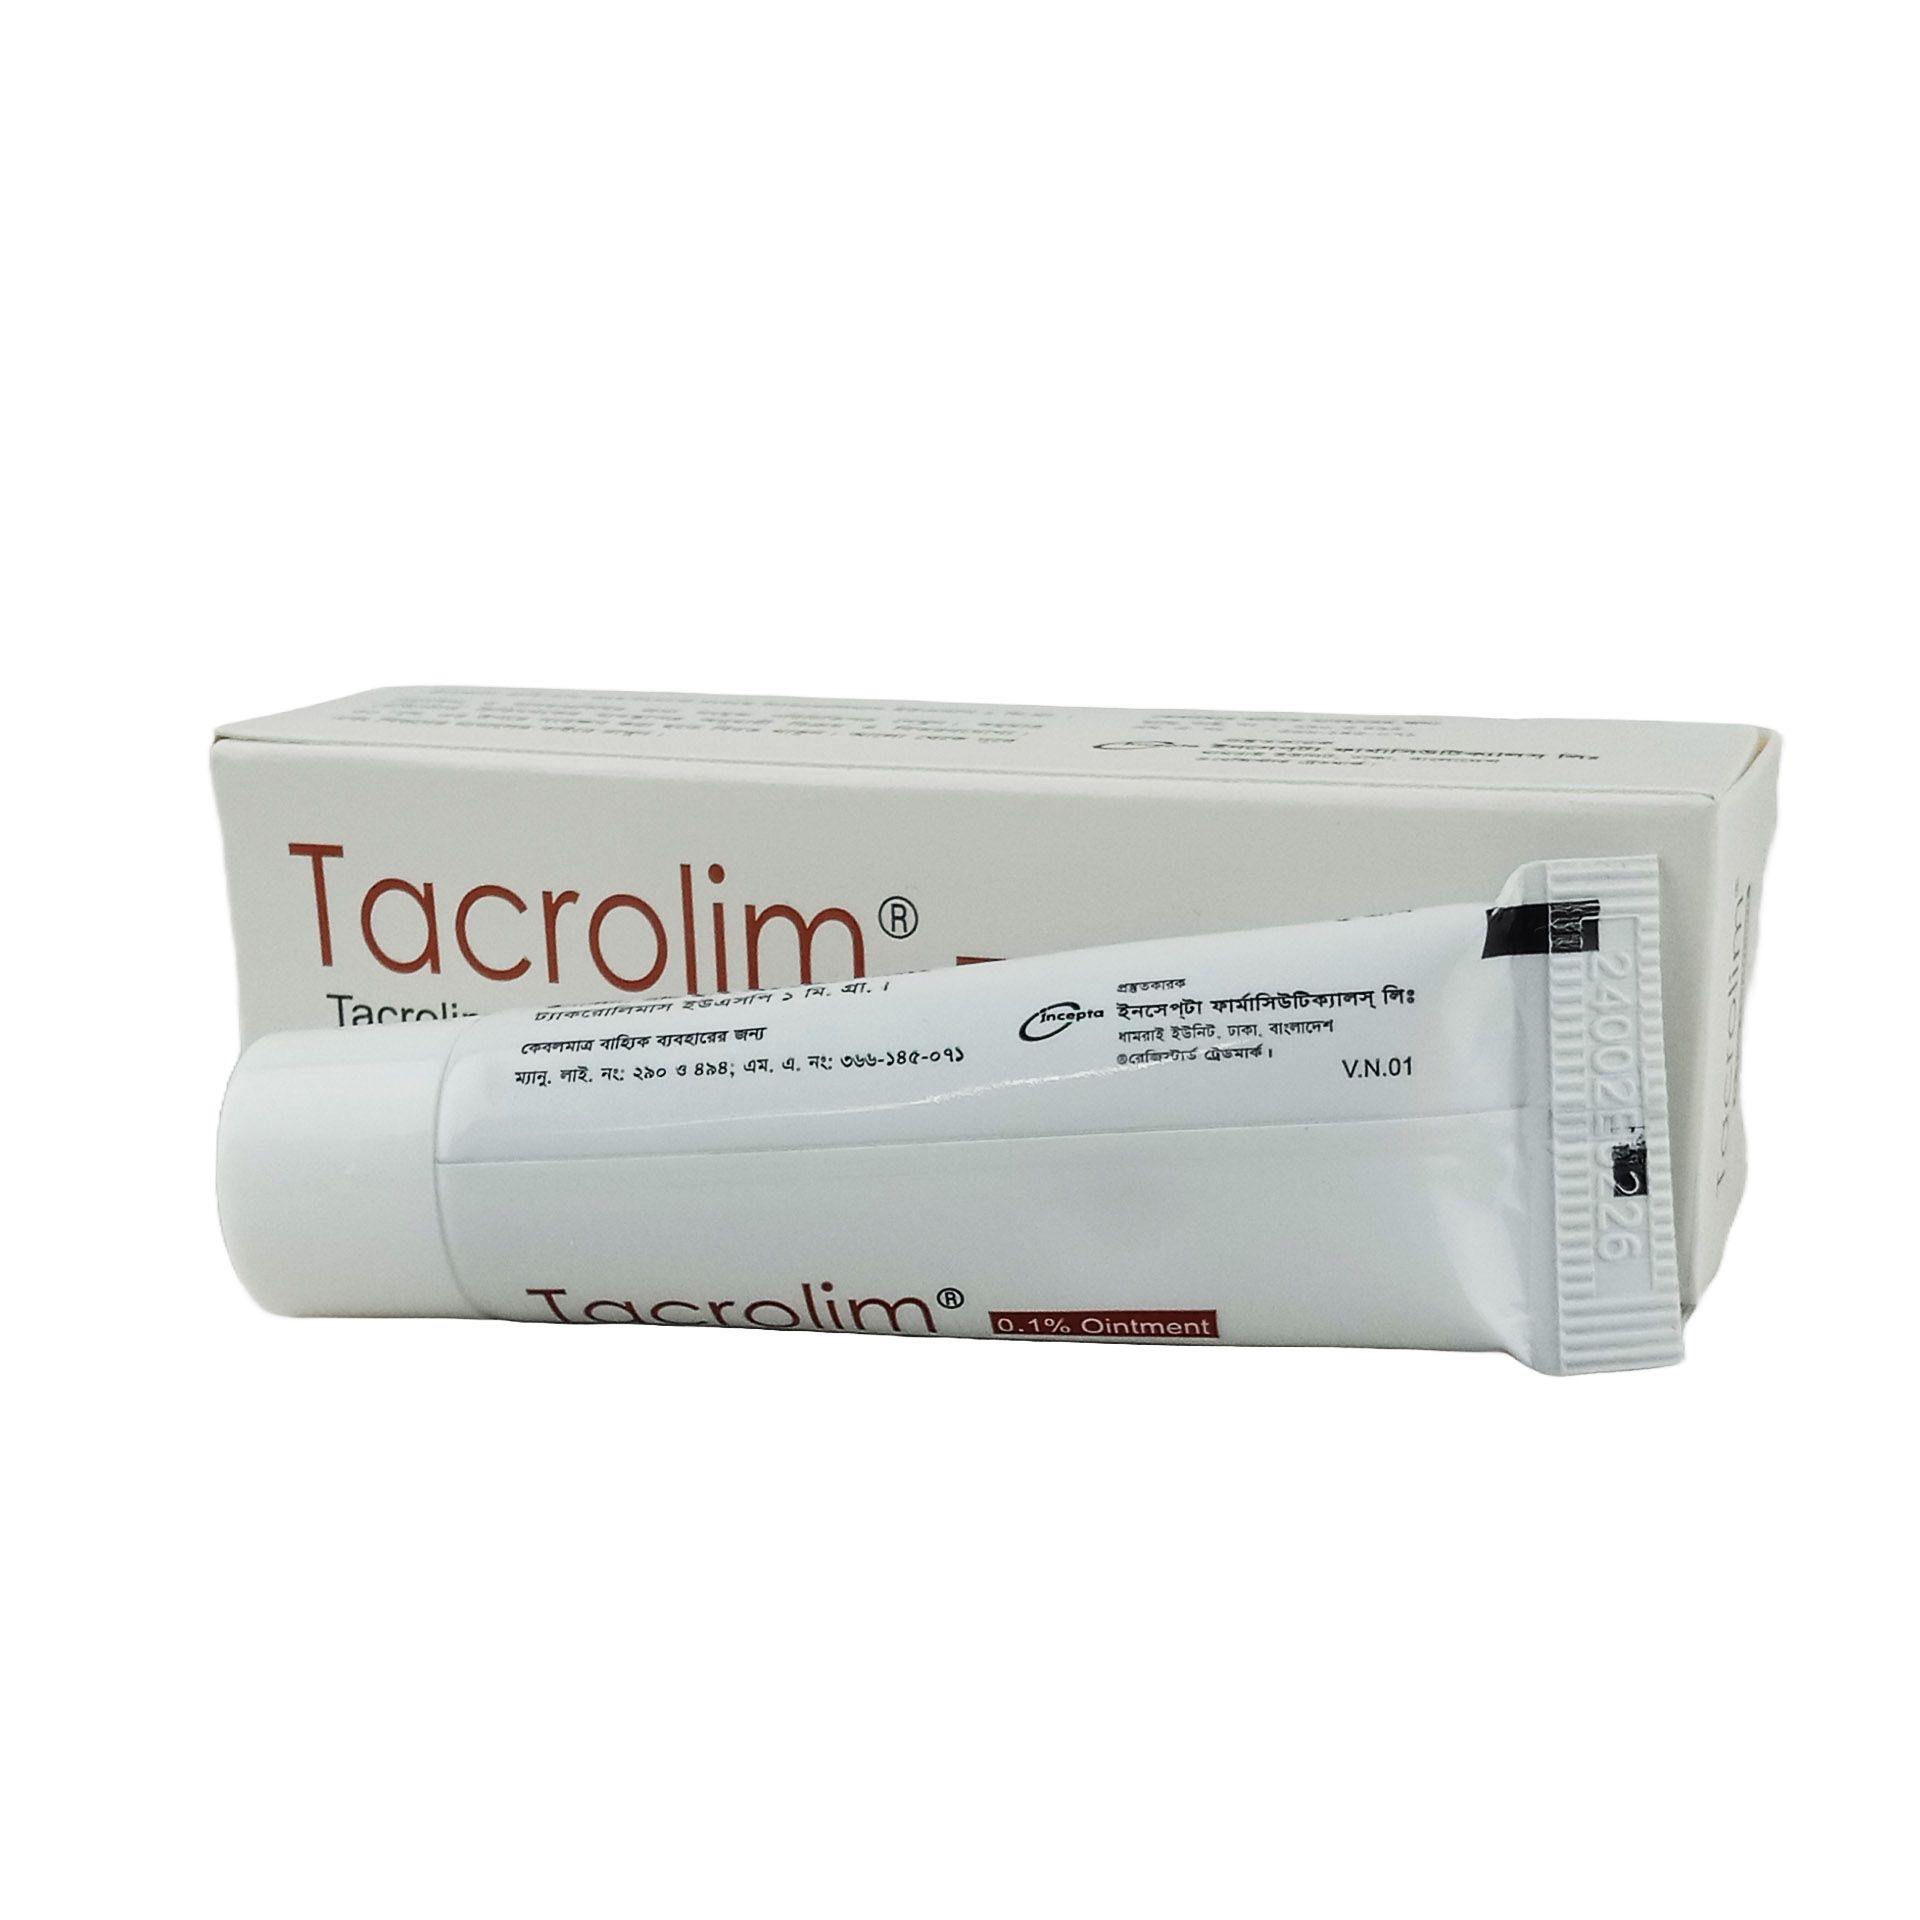 Tacrolim 0.1% 0.1% Ointment